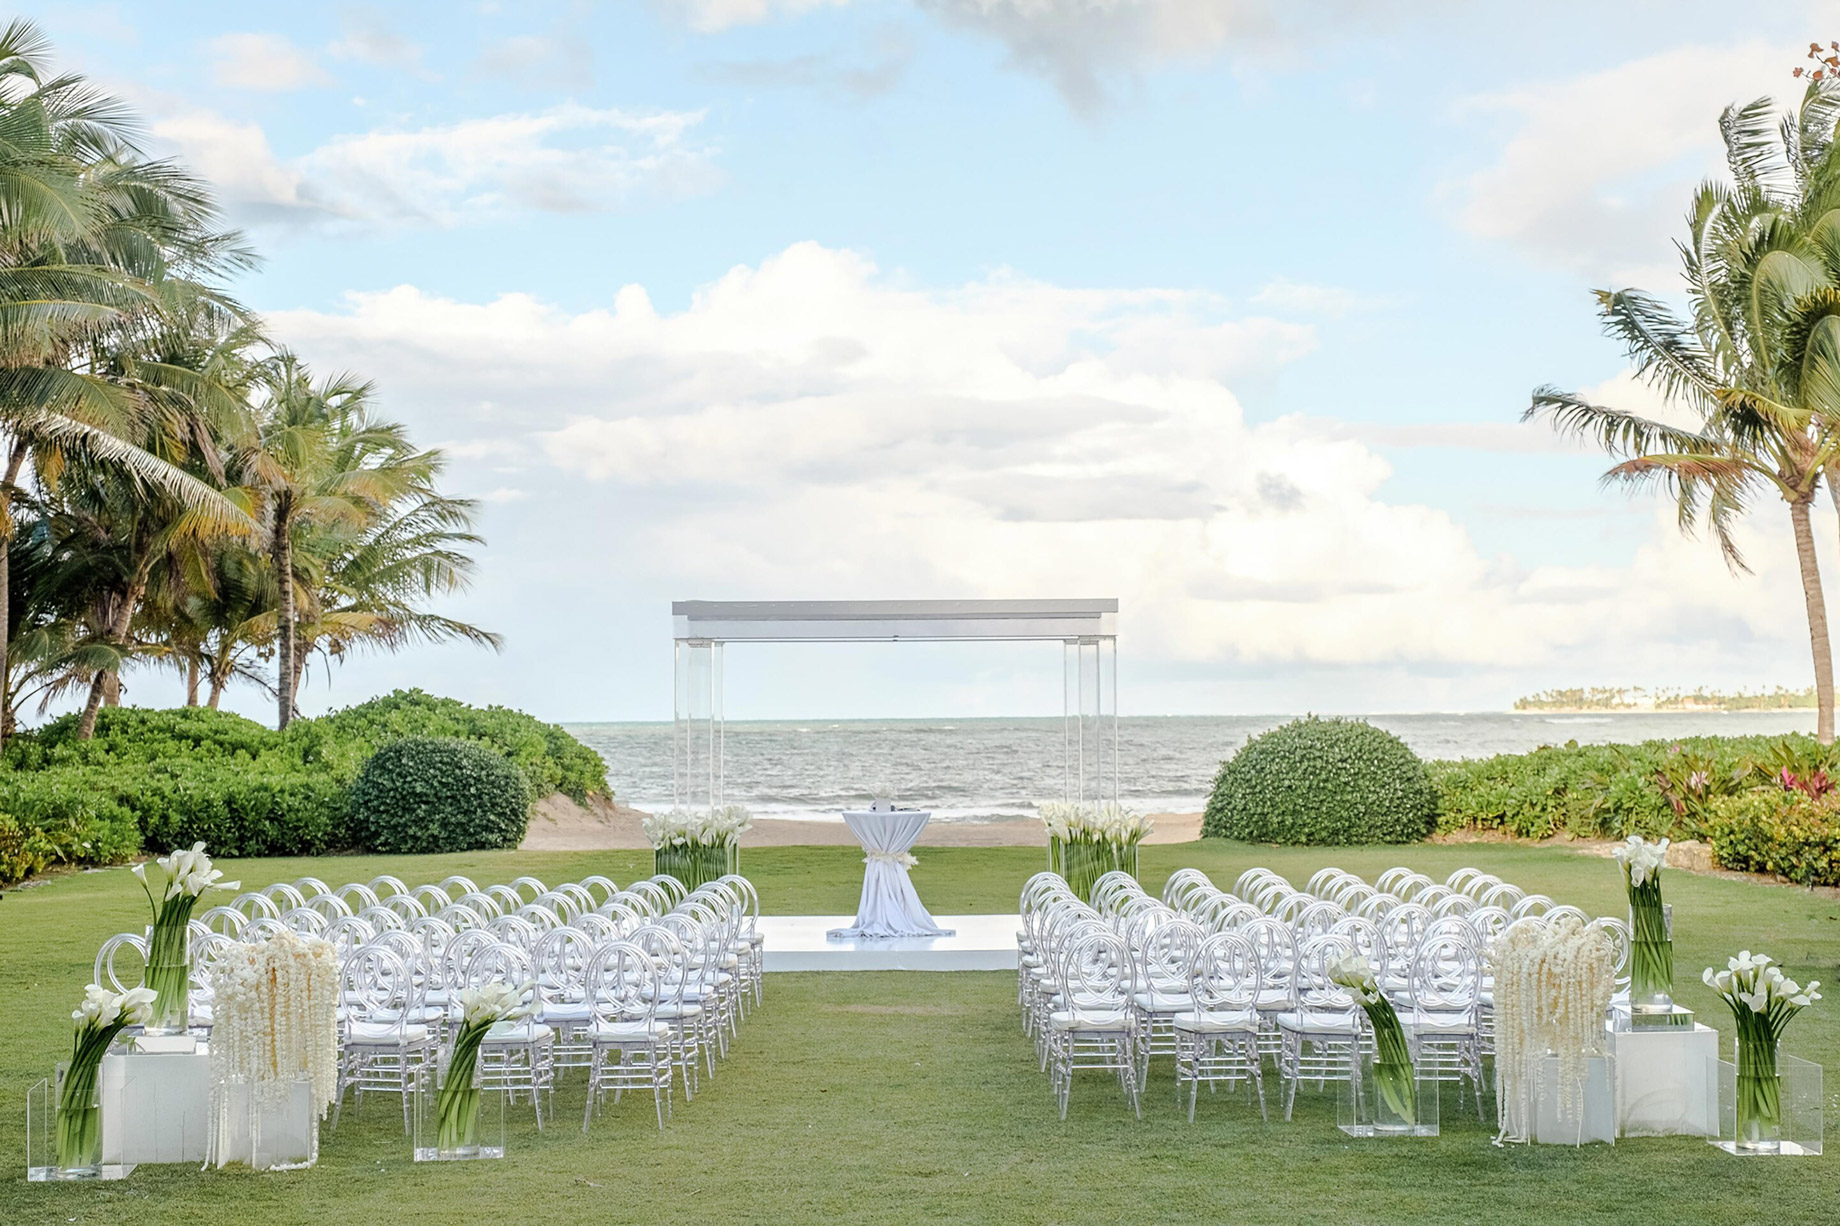 The St. Regis Bahia Beach Resort – Rio Grande, Puerto Rico – Exterior Lawn Wedding Bespoken Setup